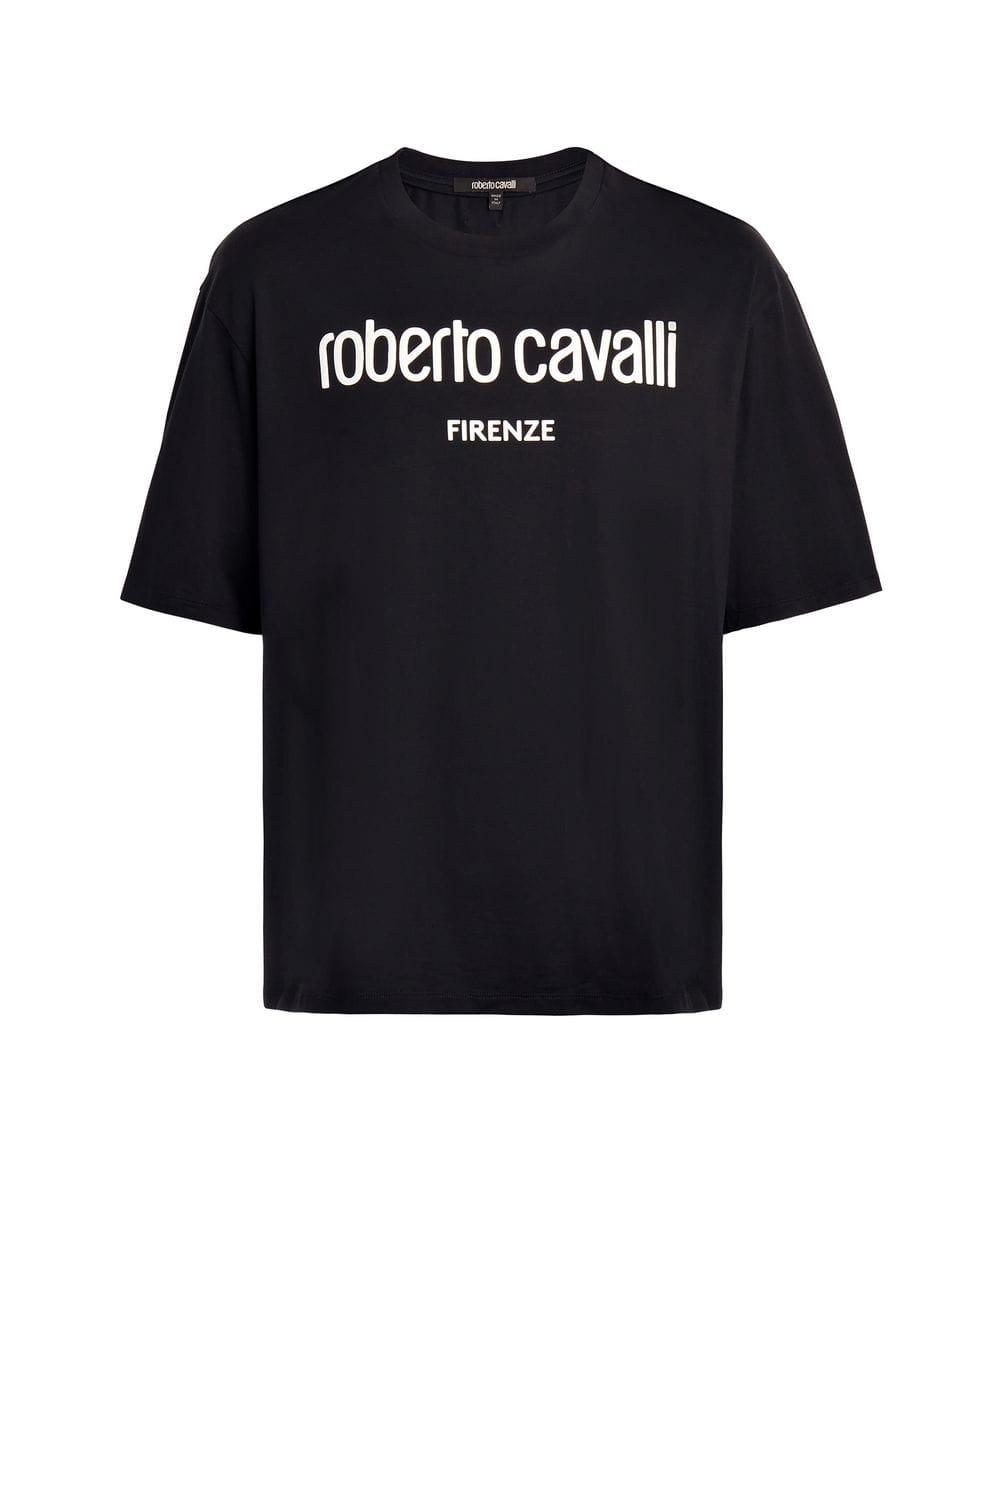 Roberto Cavalli Firenze T-shirt in Black for Men - Lyst